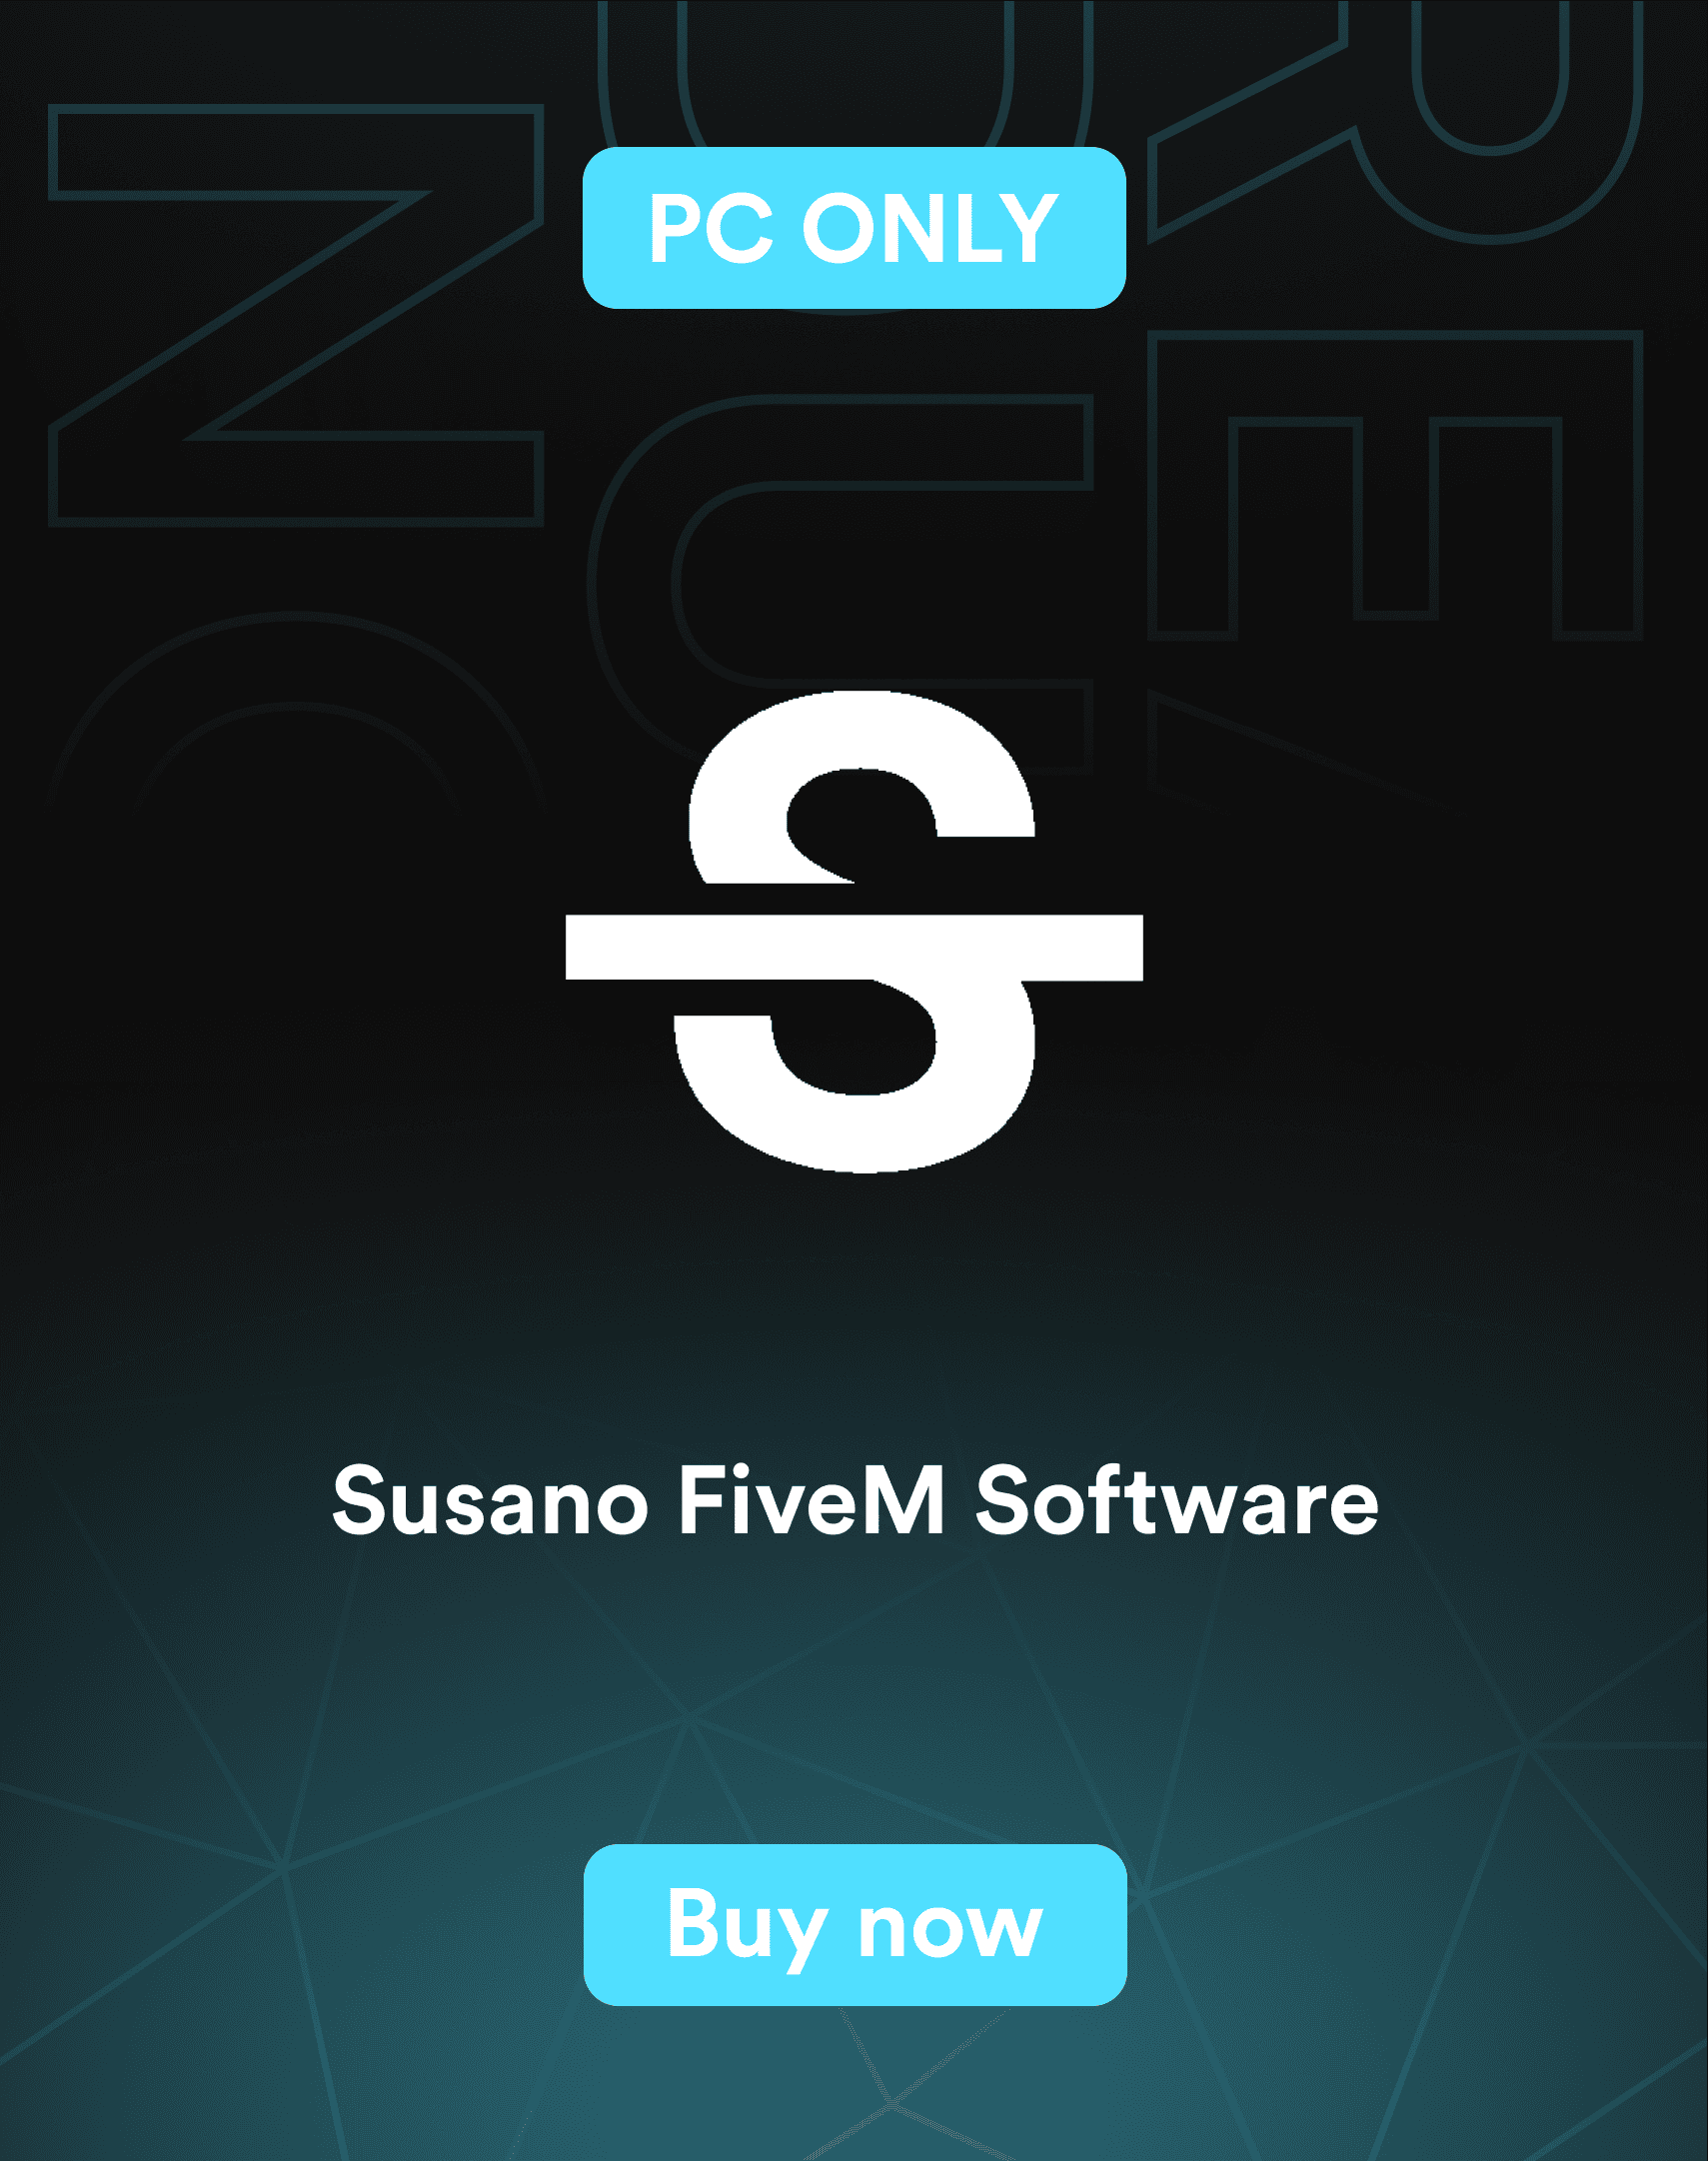 Susano FiveM Software